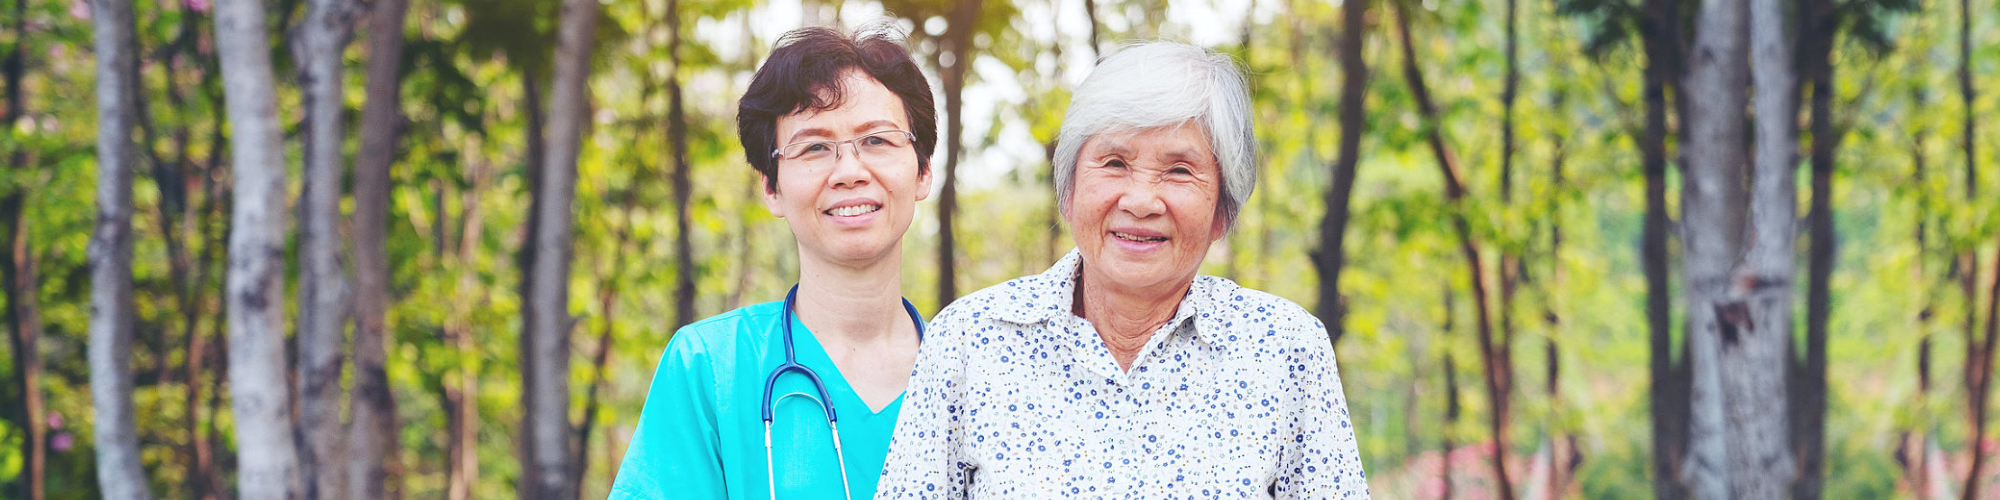 senior woman and a caregiver smiling